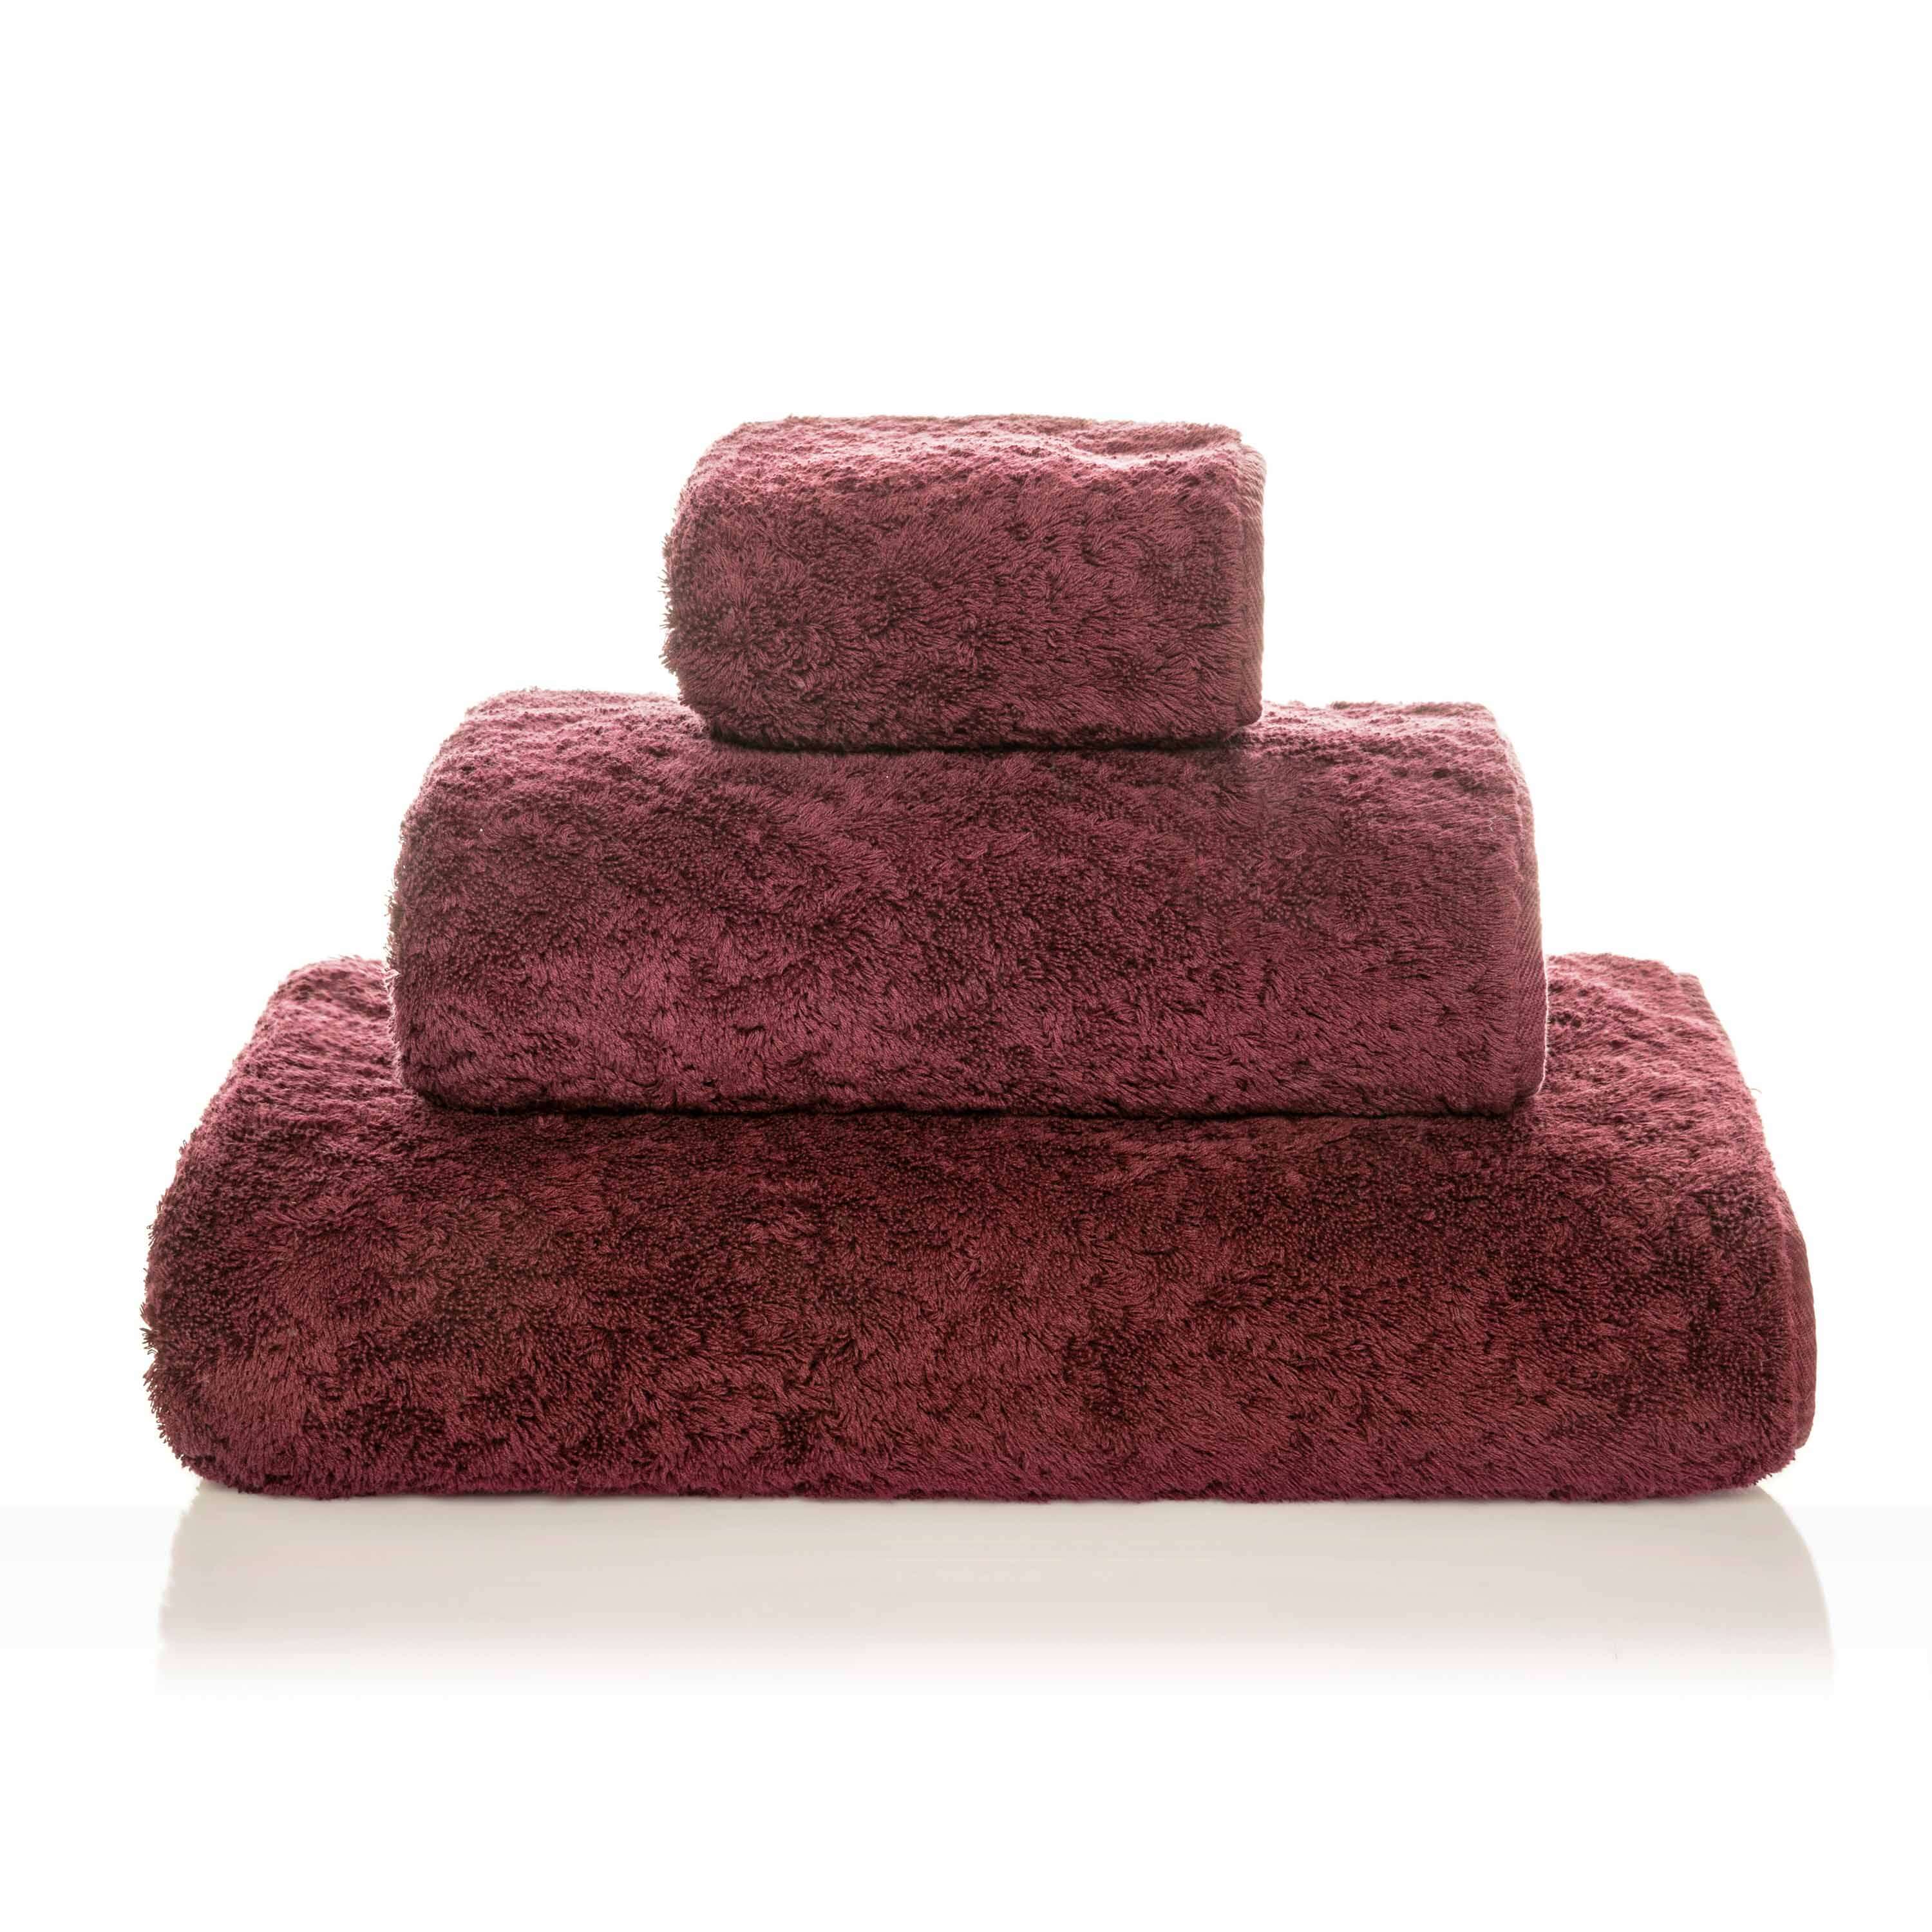 Элитное полотенце Egoist Range Bordeaux ☞ Размер: 70 x 140 см